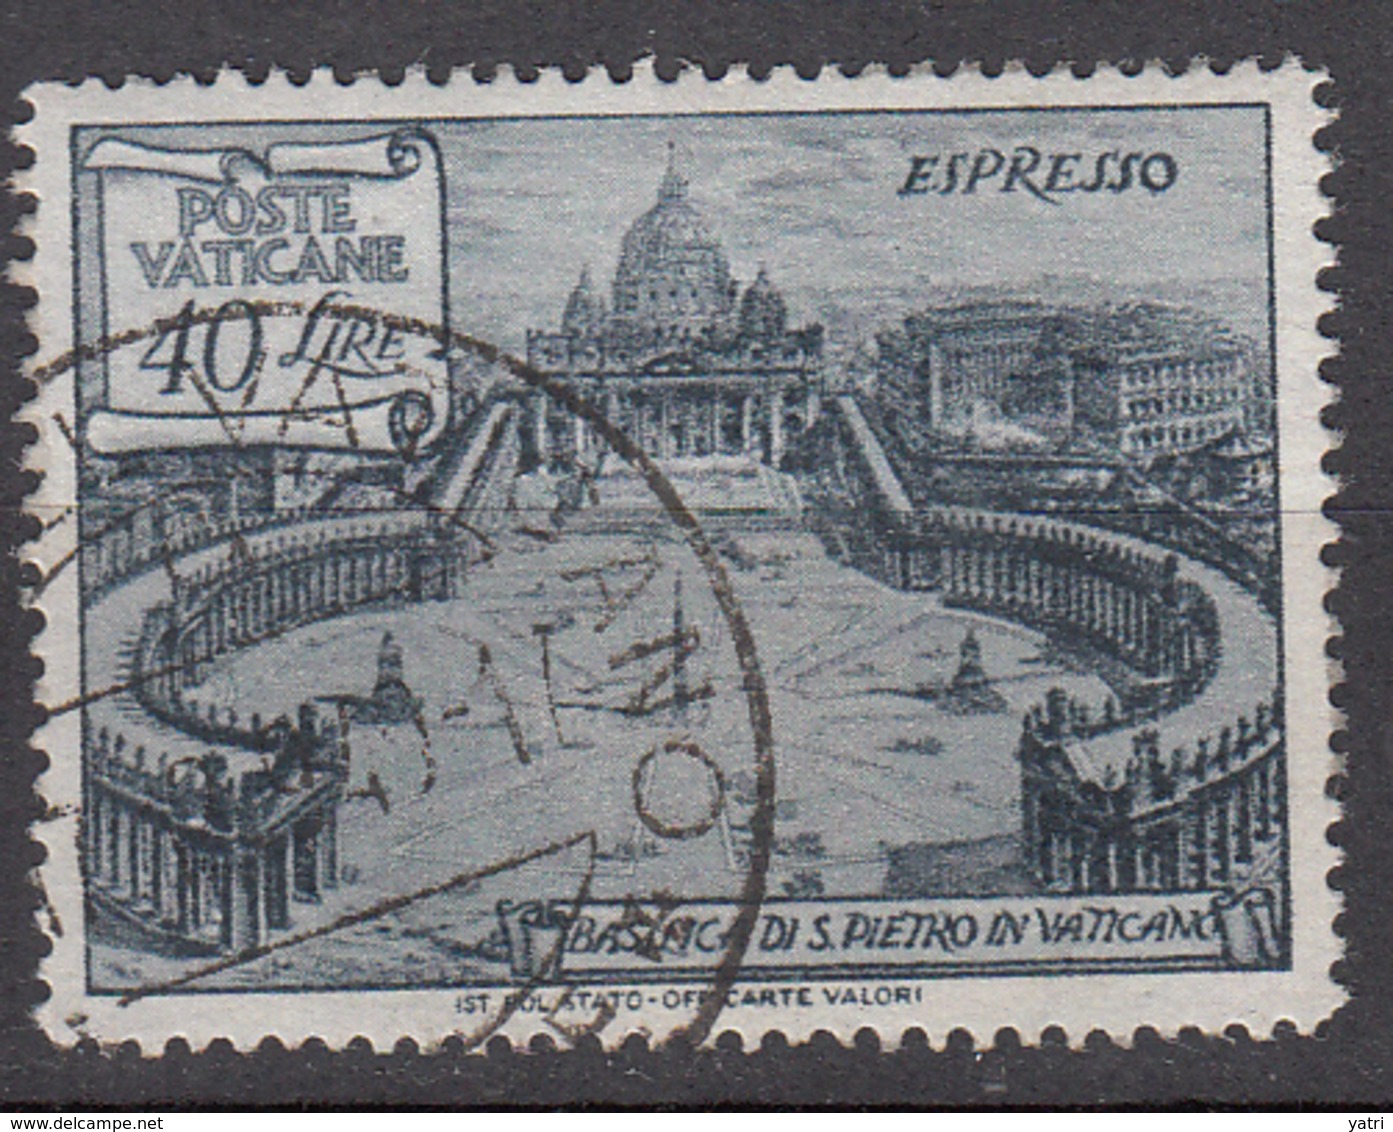 Vaticano - 1949 - Basiliche, Espresso 40 Lire - Eilsendung (Eilpost)